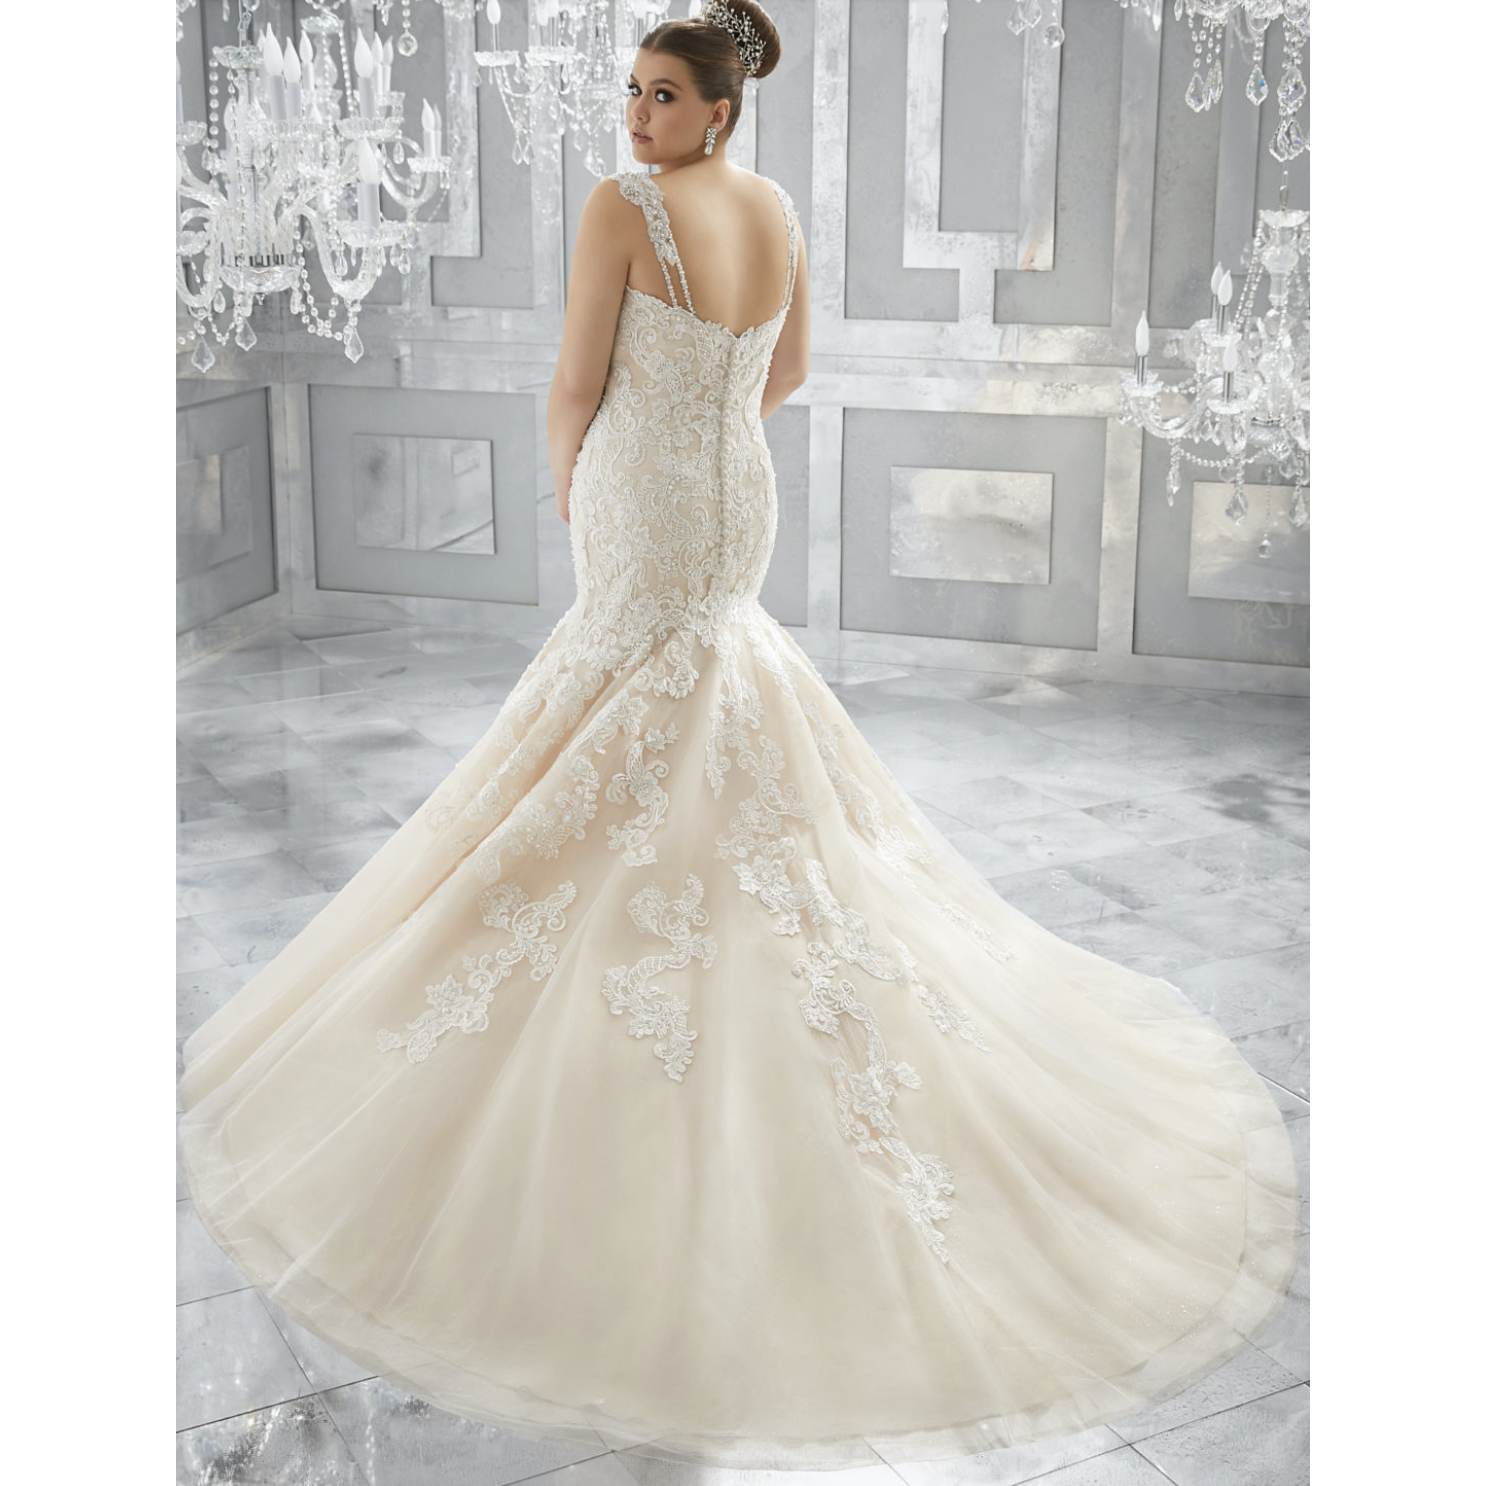 Mori Lee 3221 - My Dream Dress Bridal